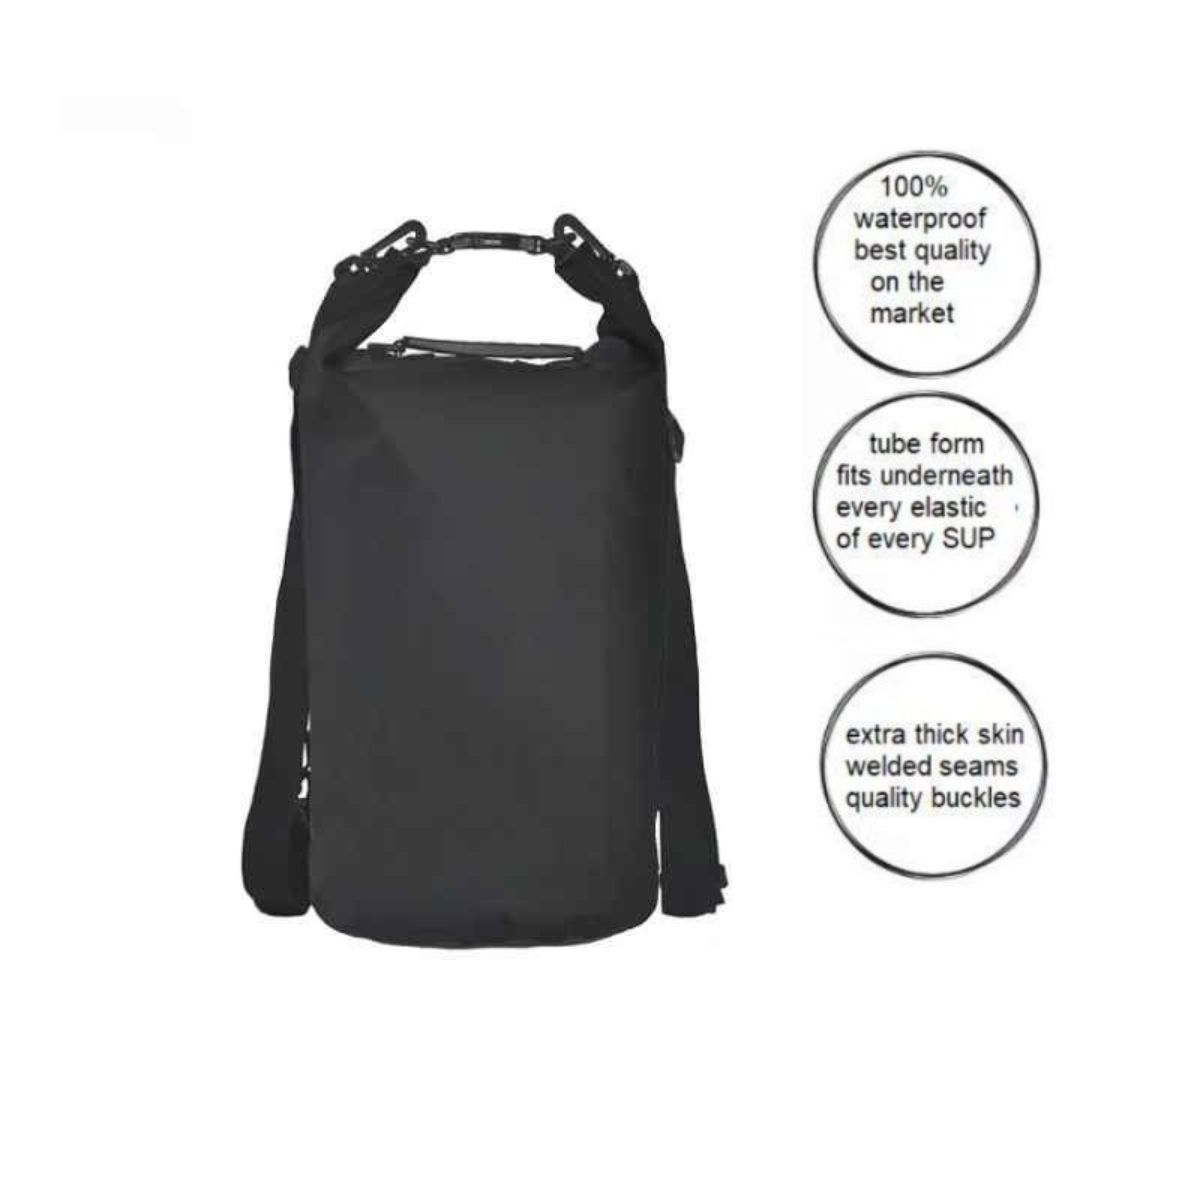  FIT OCEAN premium Quality 5 litre Waterproof Bag